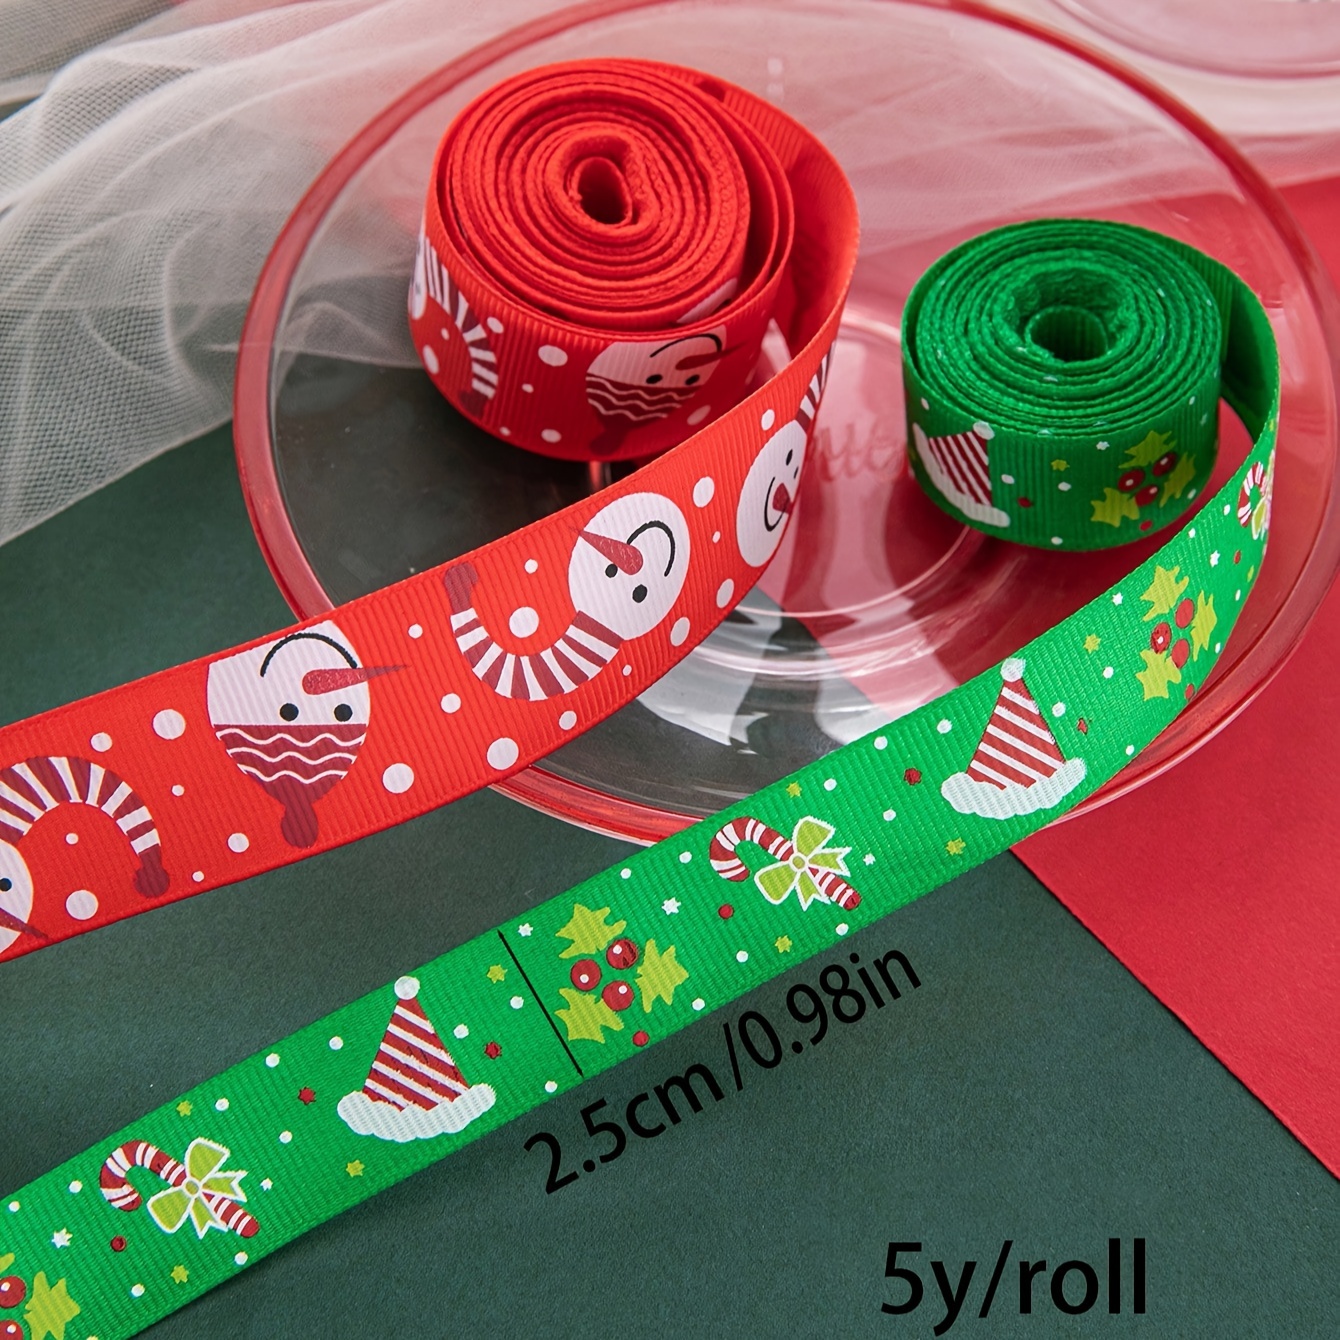 Christmas Decorations 2.5cm Ribbon Gift Wrapping Ribbon Snowflake